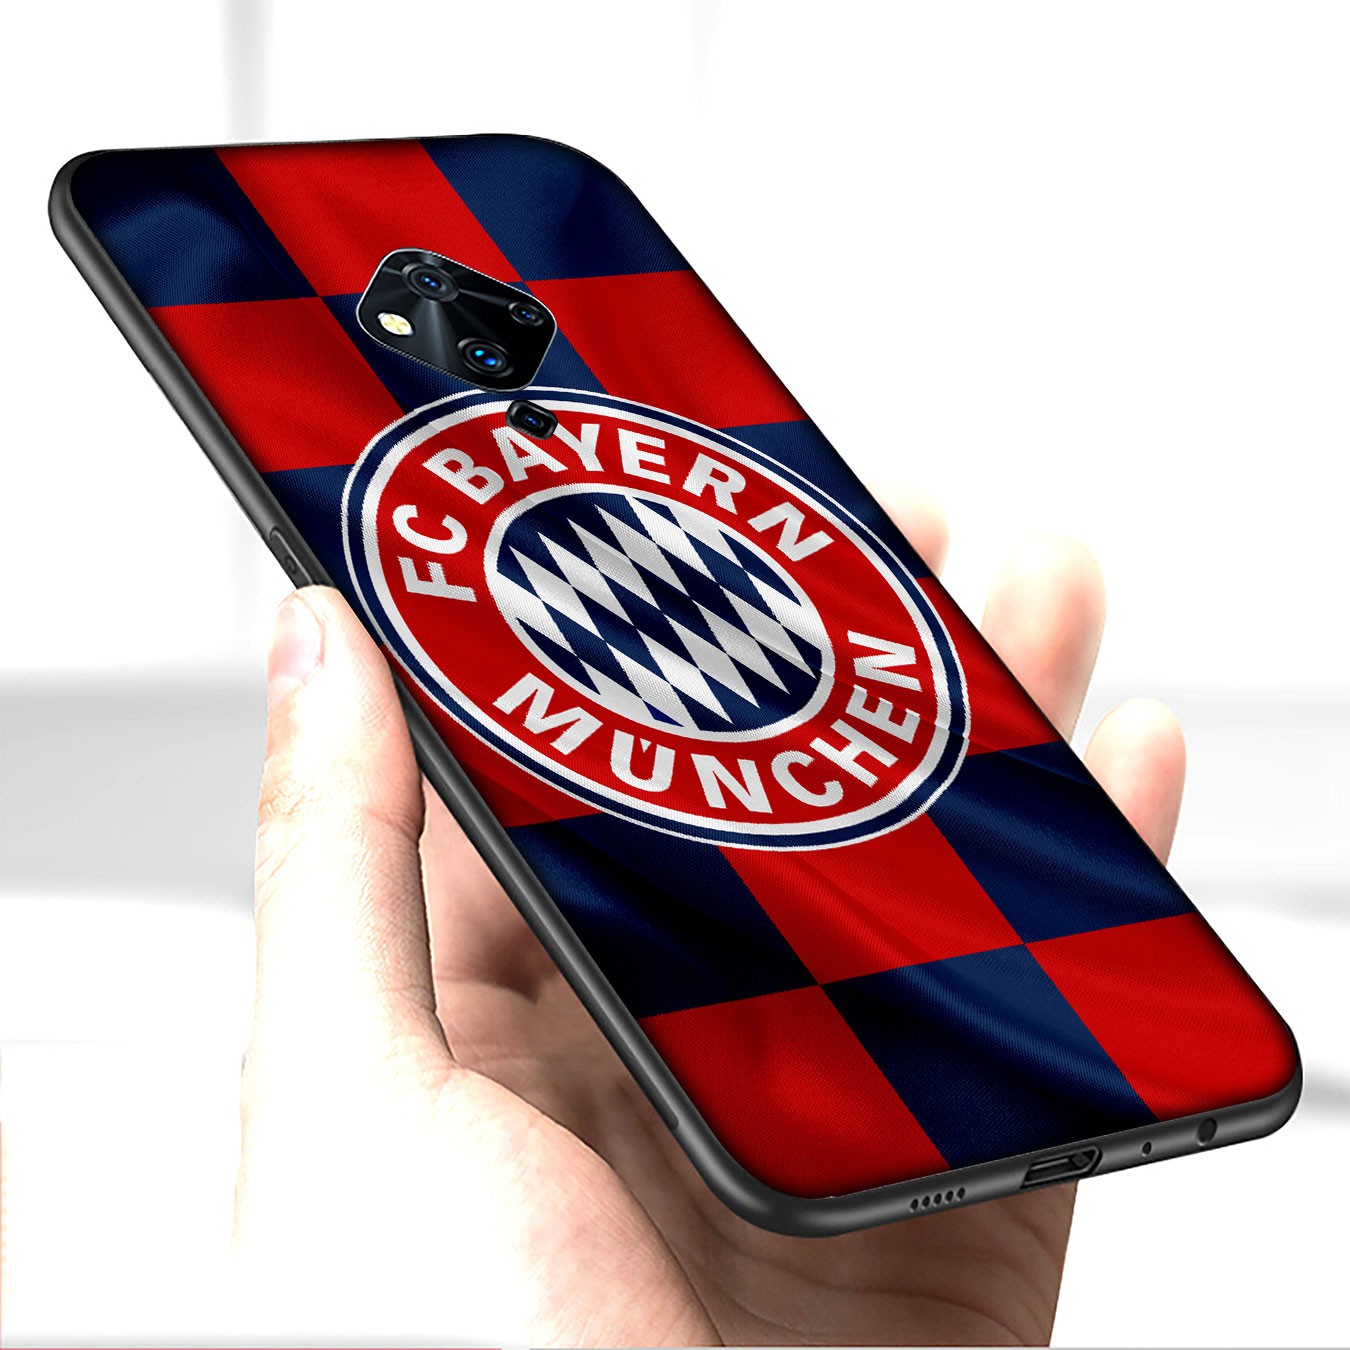 Samsung Galaxy A02S J2 J4 J5 J6 Plus J7 Prime A02 M02 j6+ A42 + Casing Soft Silicone FC Bayern Munich Football Phone Case